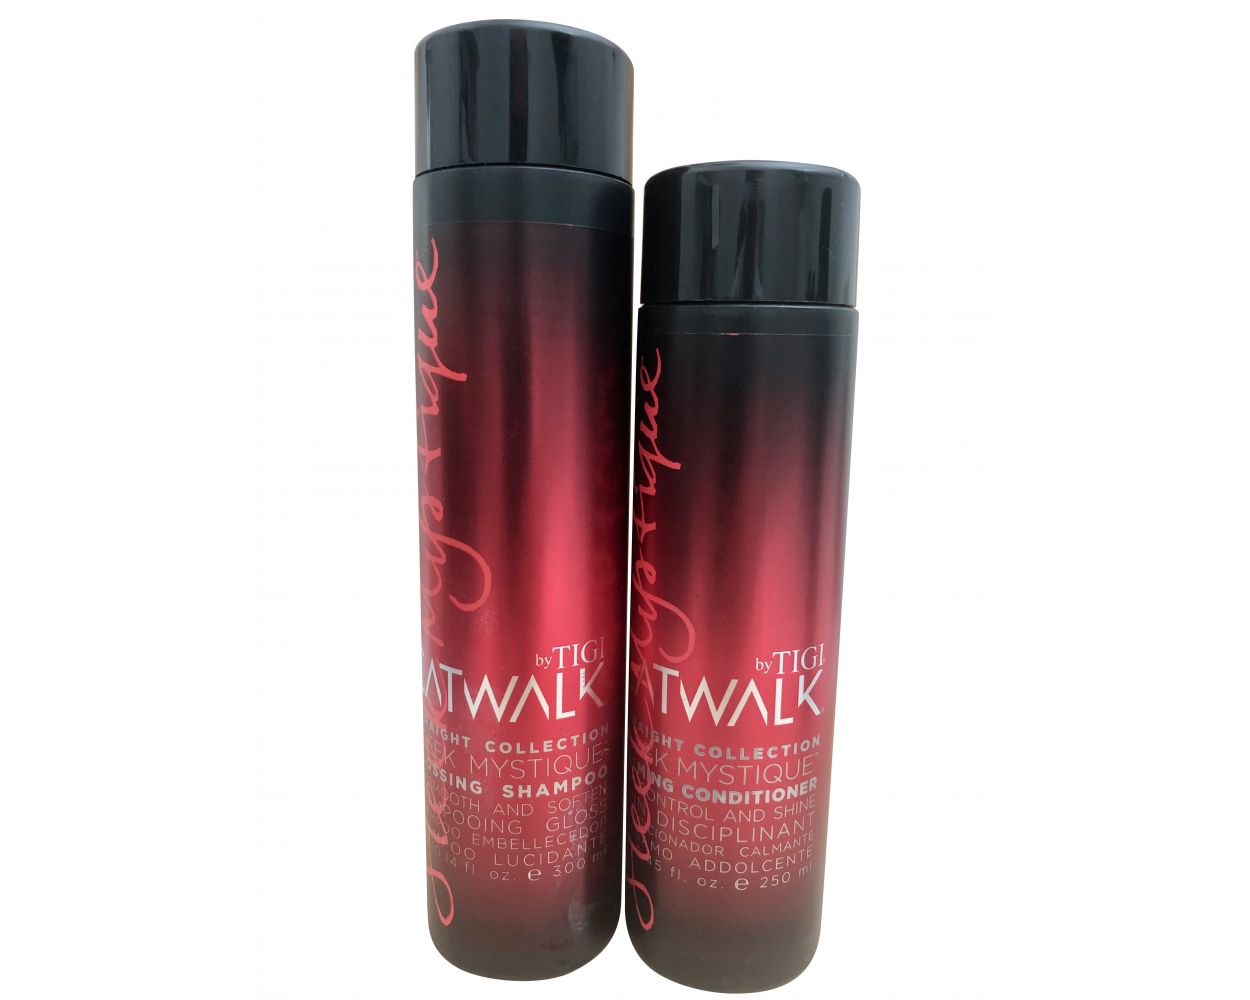 Tigi Catwalk Sleek Mystique Collection Shampoo & Set | Shampoo - Beautyvice.com